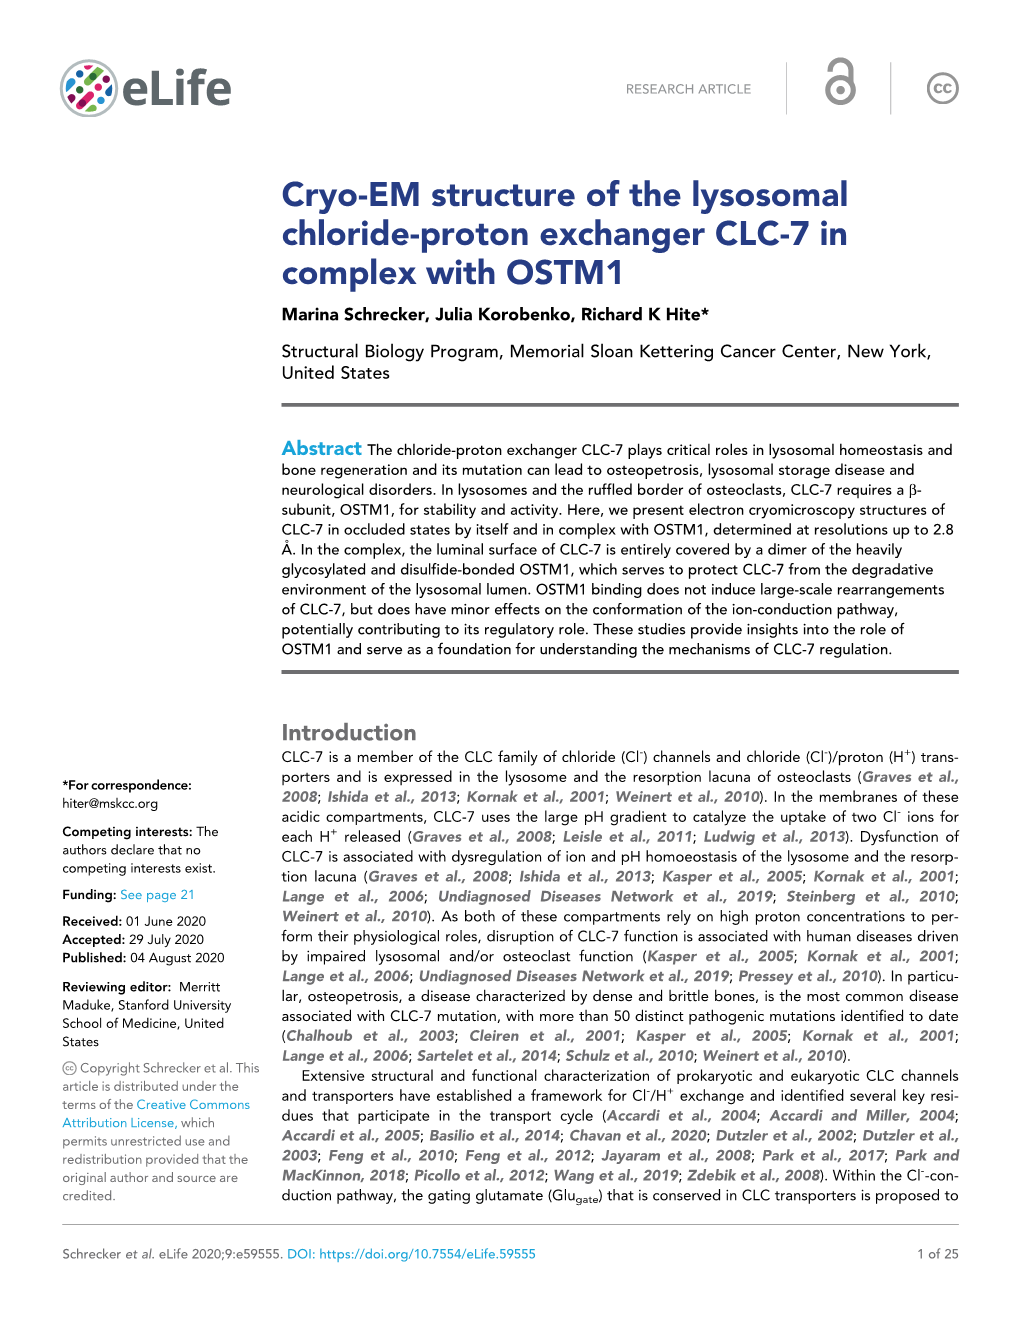 Cryo-EM Structure of the Lysosomal Chloride-Proton Exchanger CLC-7 in Complex with OSTM1 Marina Schrecker, Julia Korobenko, Richard K Hite*